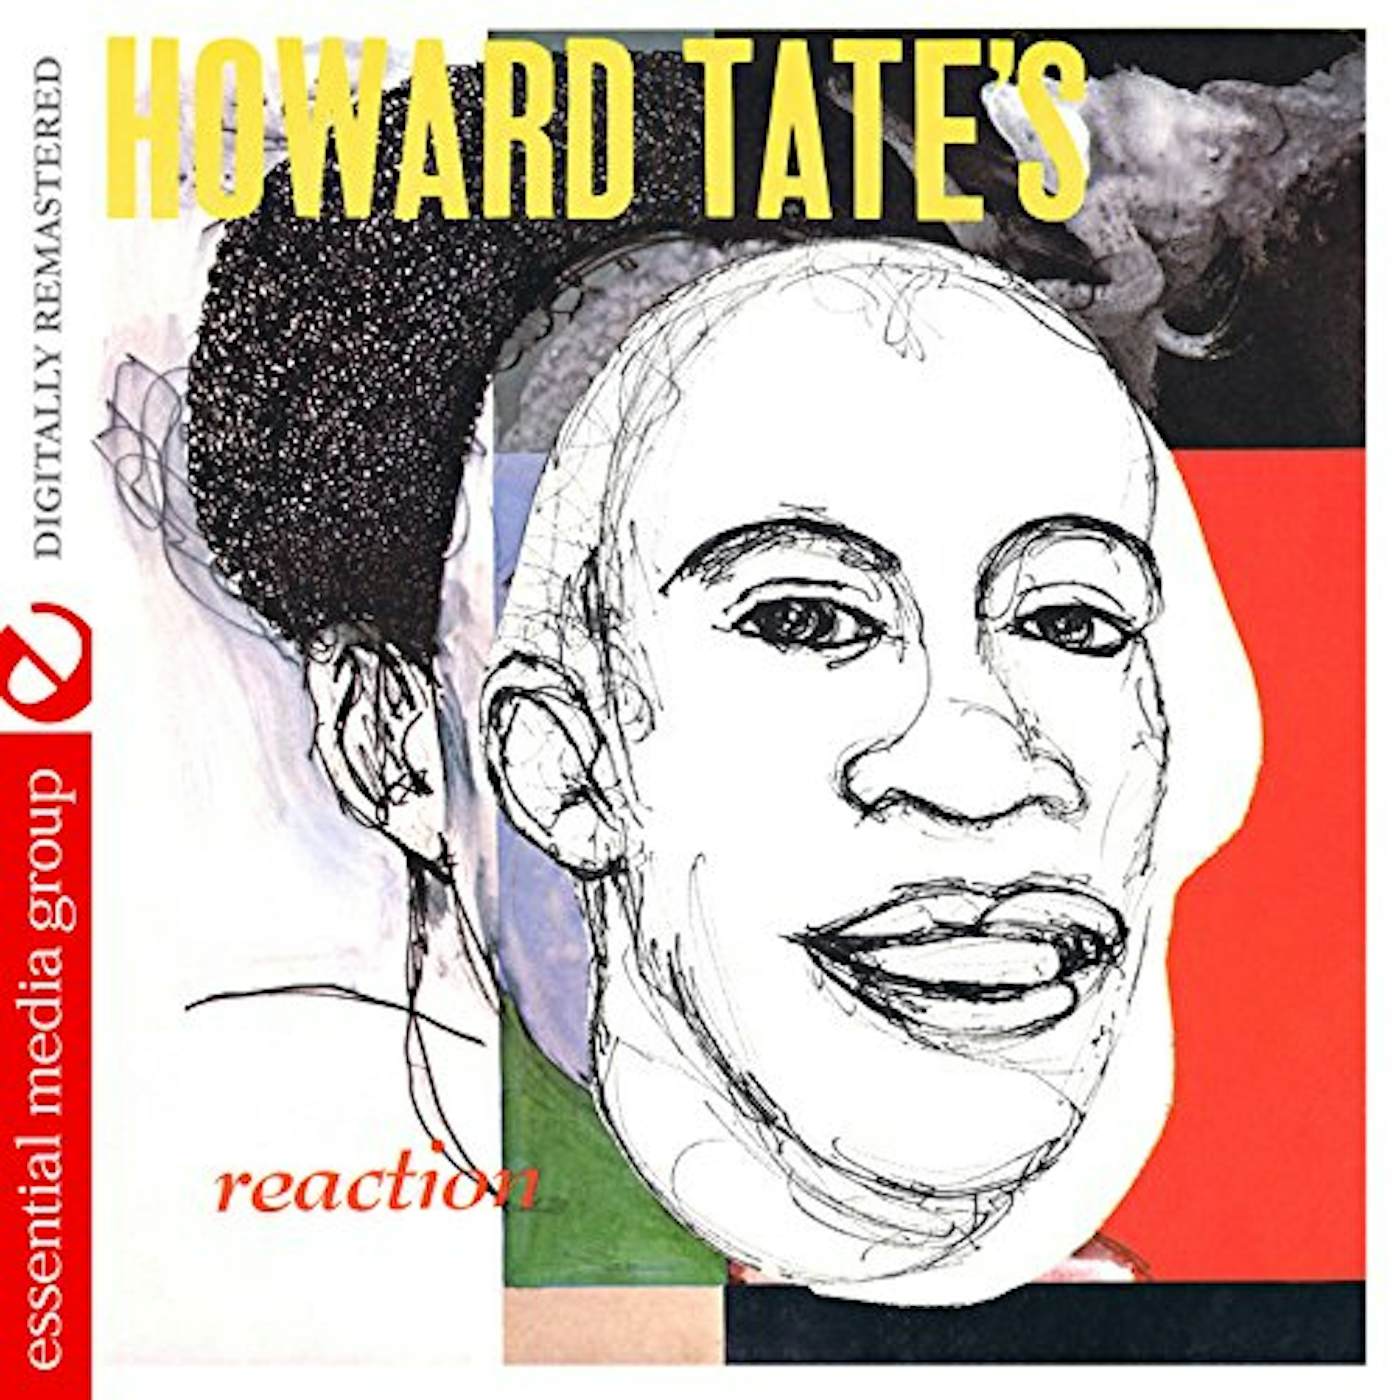 HOWARD TATE'S REACTION CD